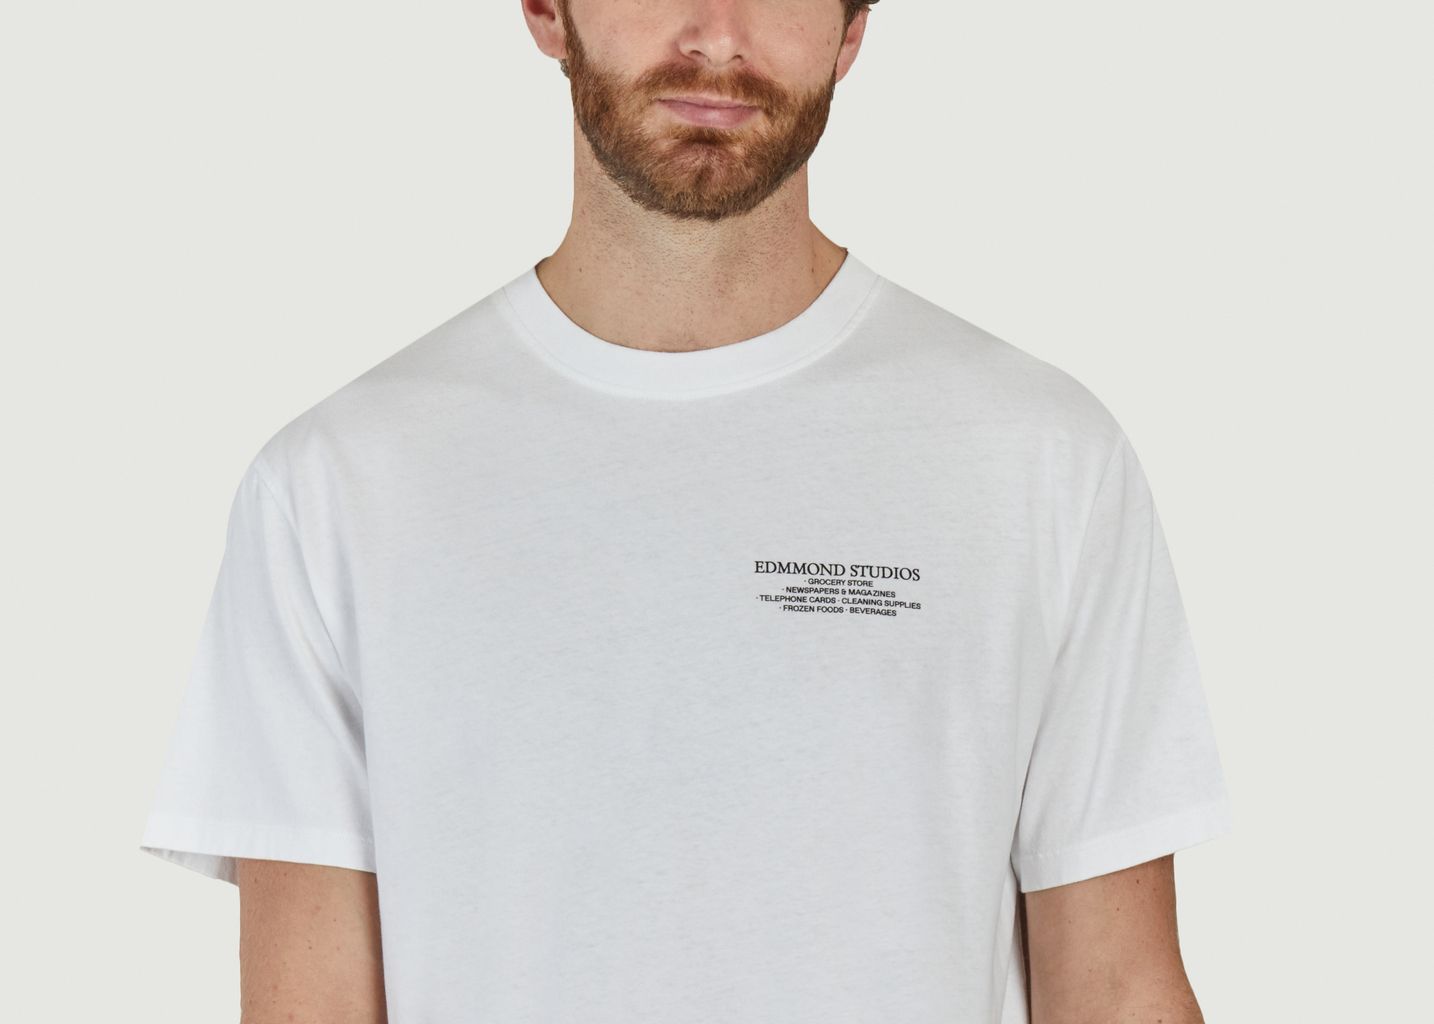 T-shirt Mini Market - Edmmond Studios